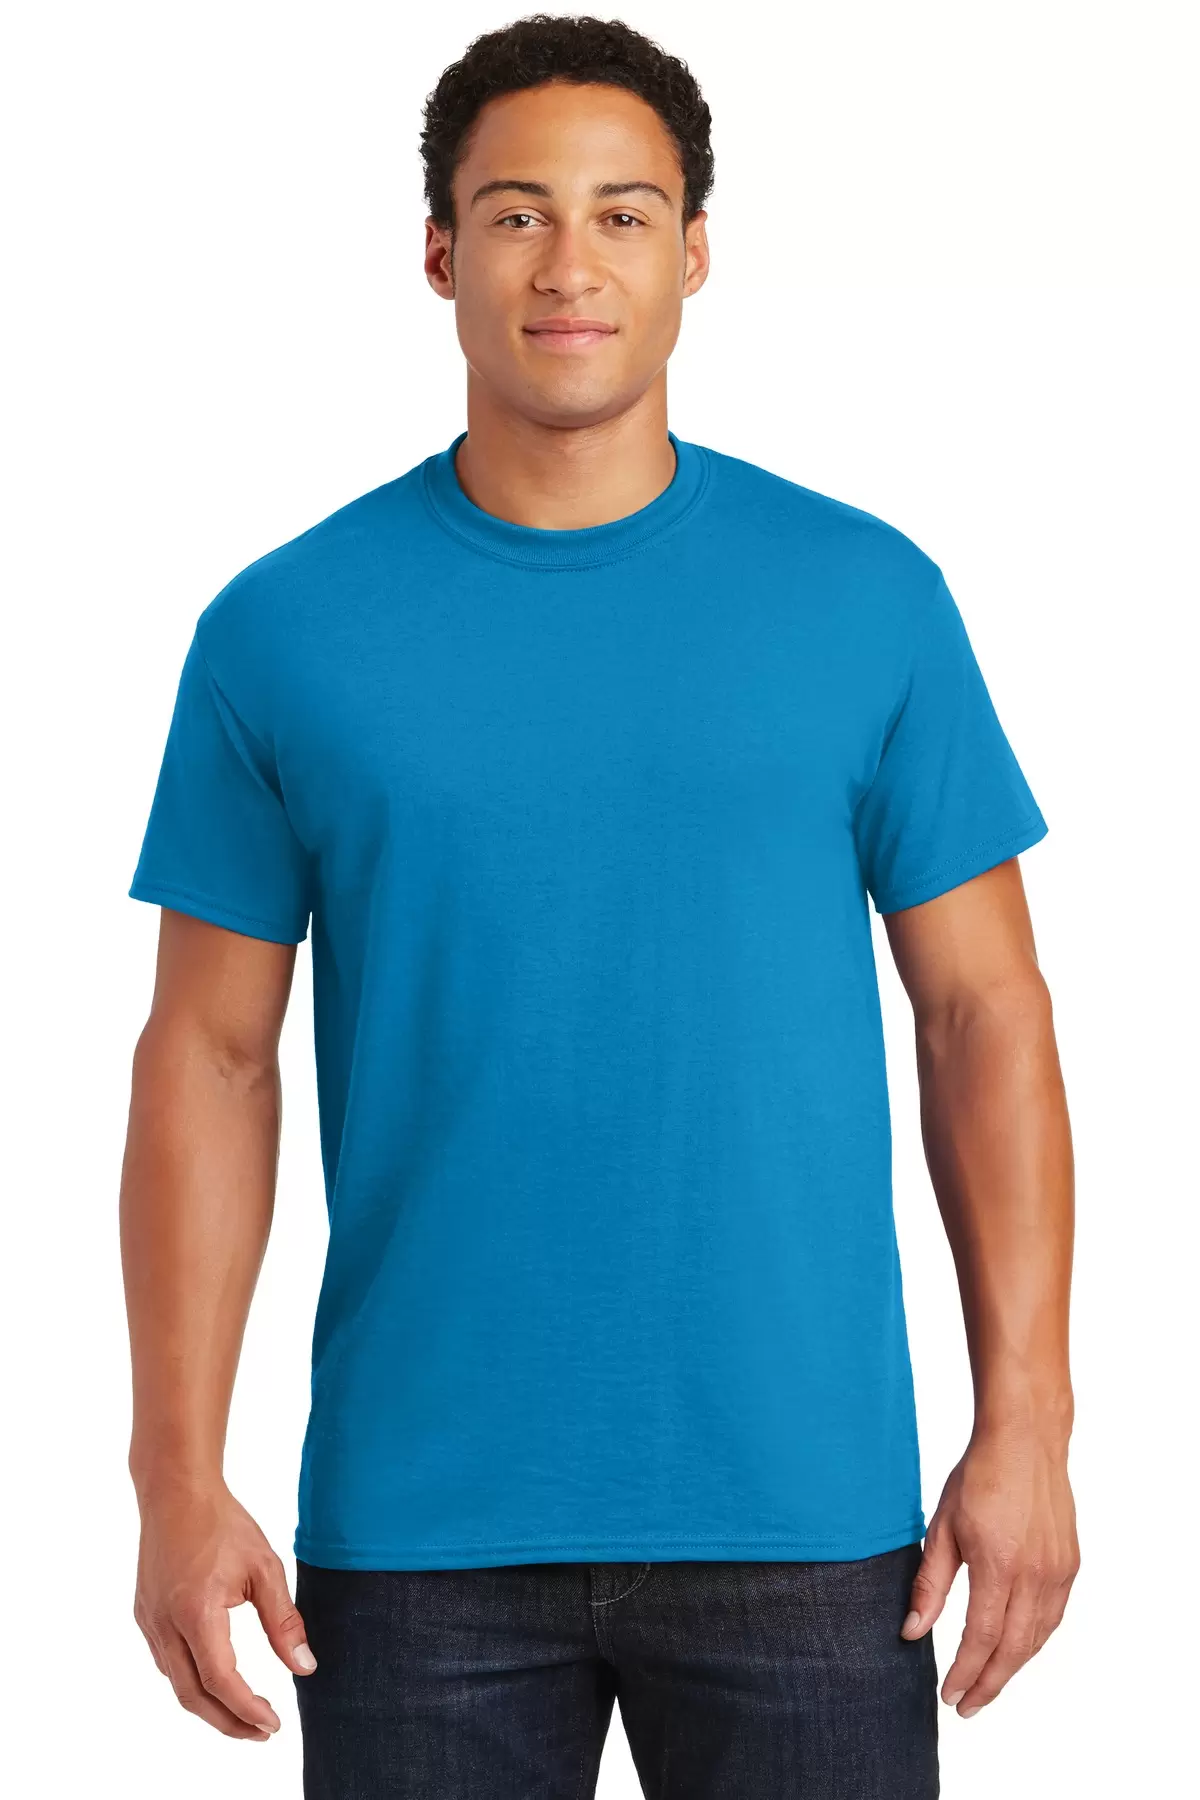 Tørke Kvadrant gennembore Gildan DryBlend T-Shirt (Wholesale) | Gildan 8000/G8000 - From $3.29